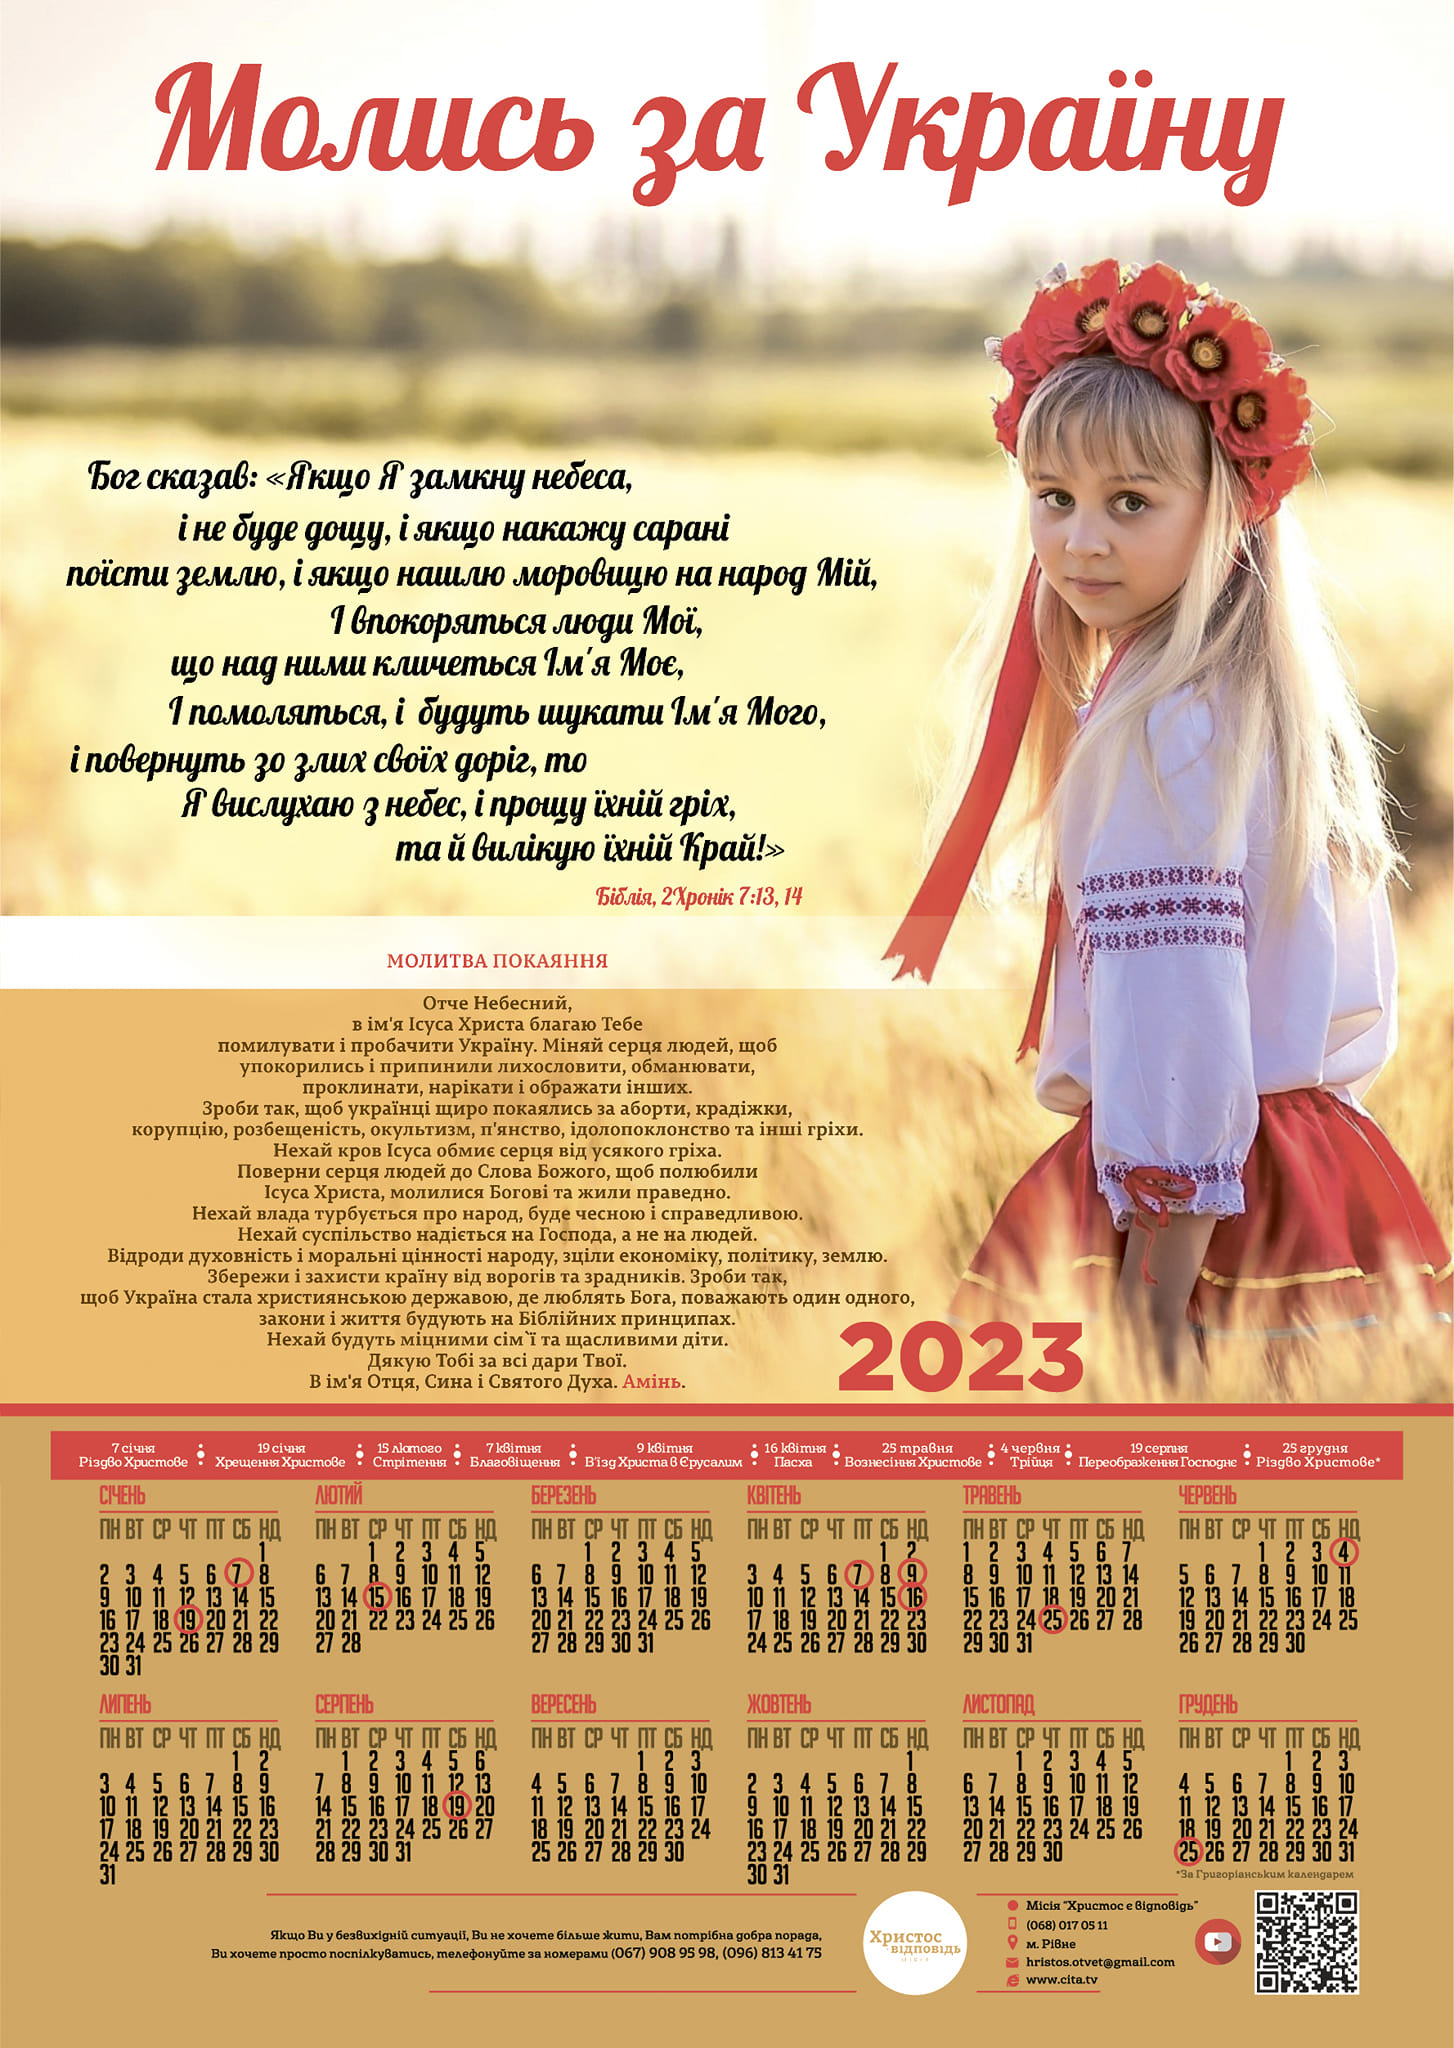 Calendars: Rivne Residents Receive 50 Thousand